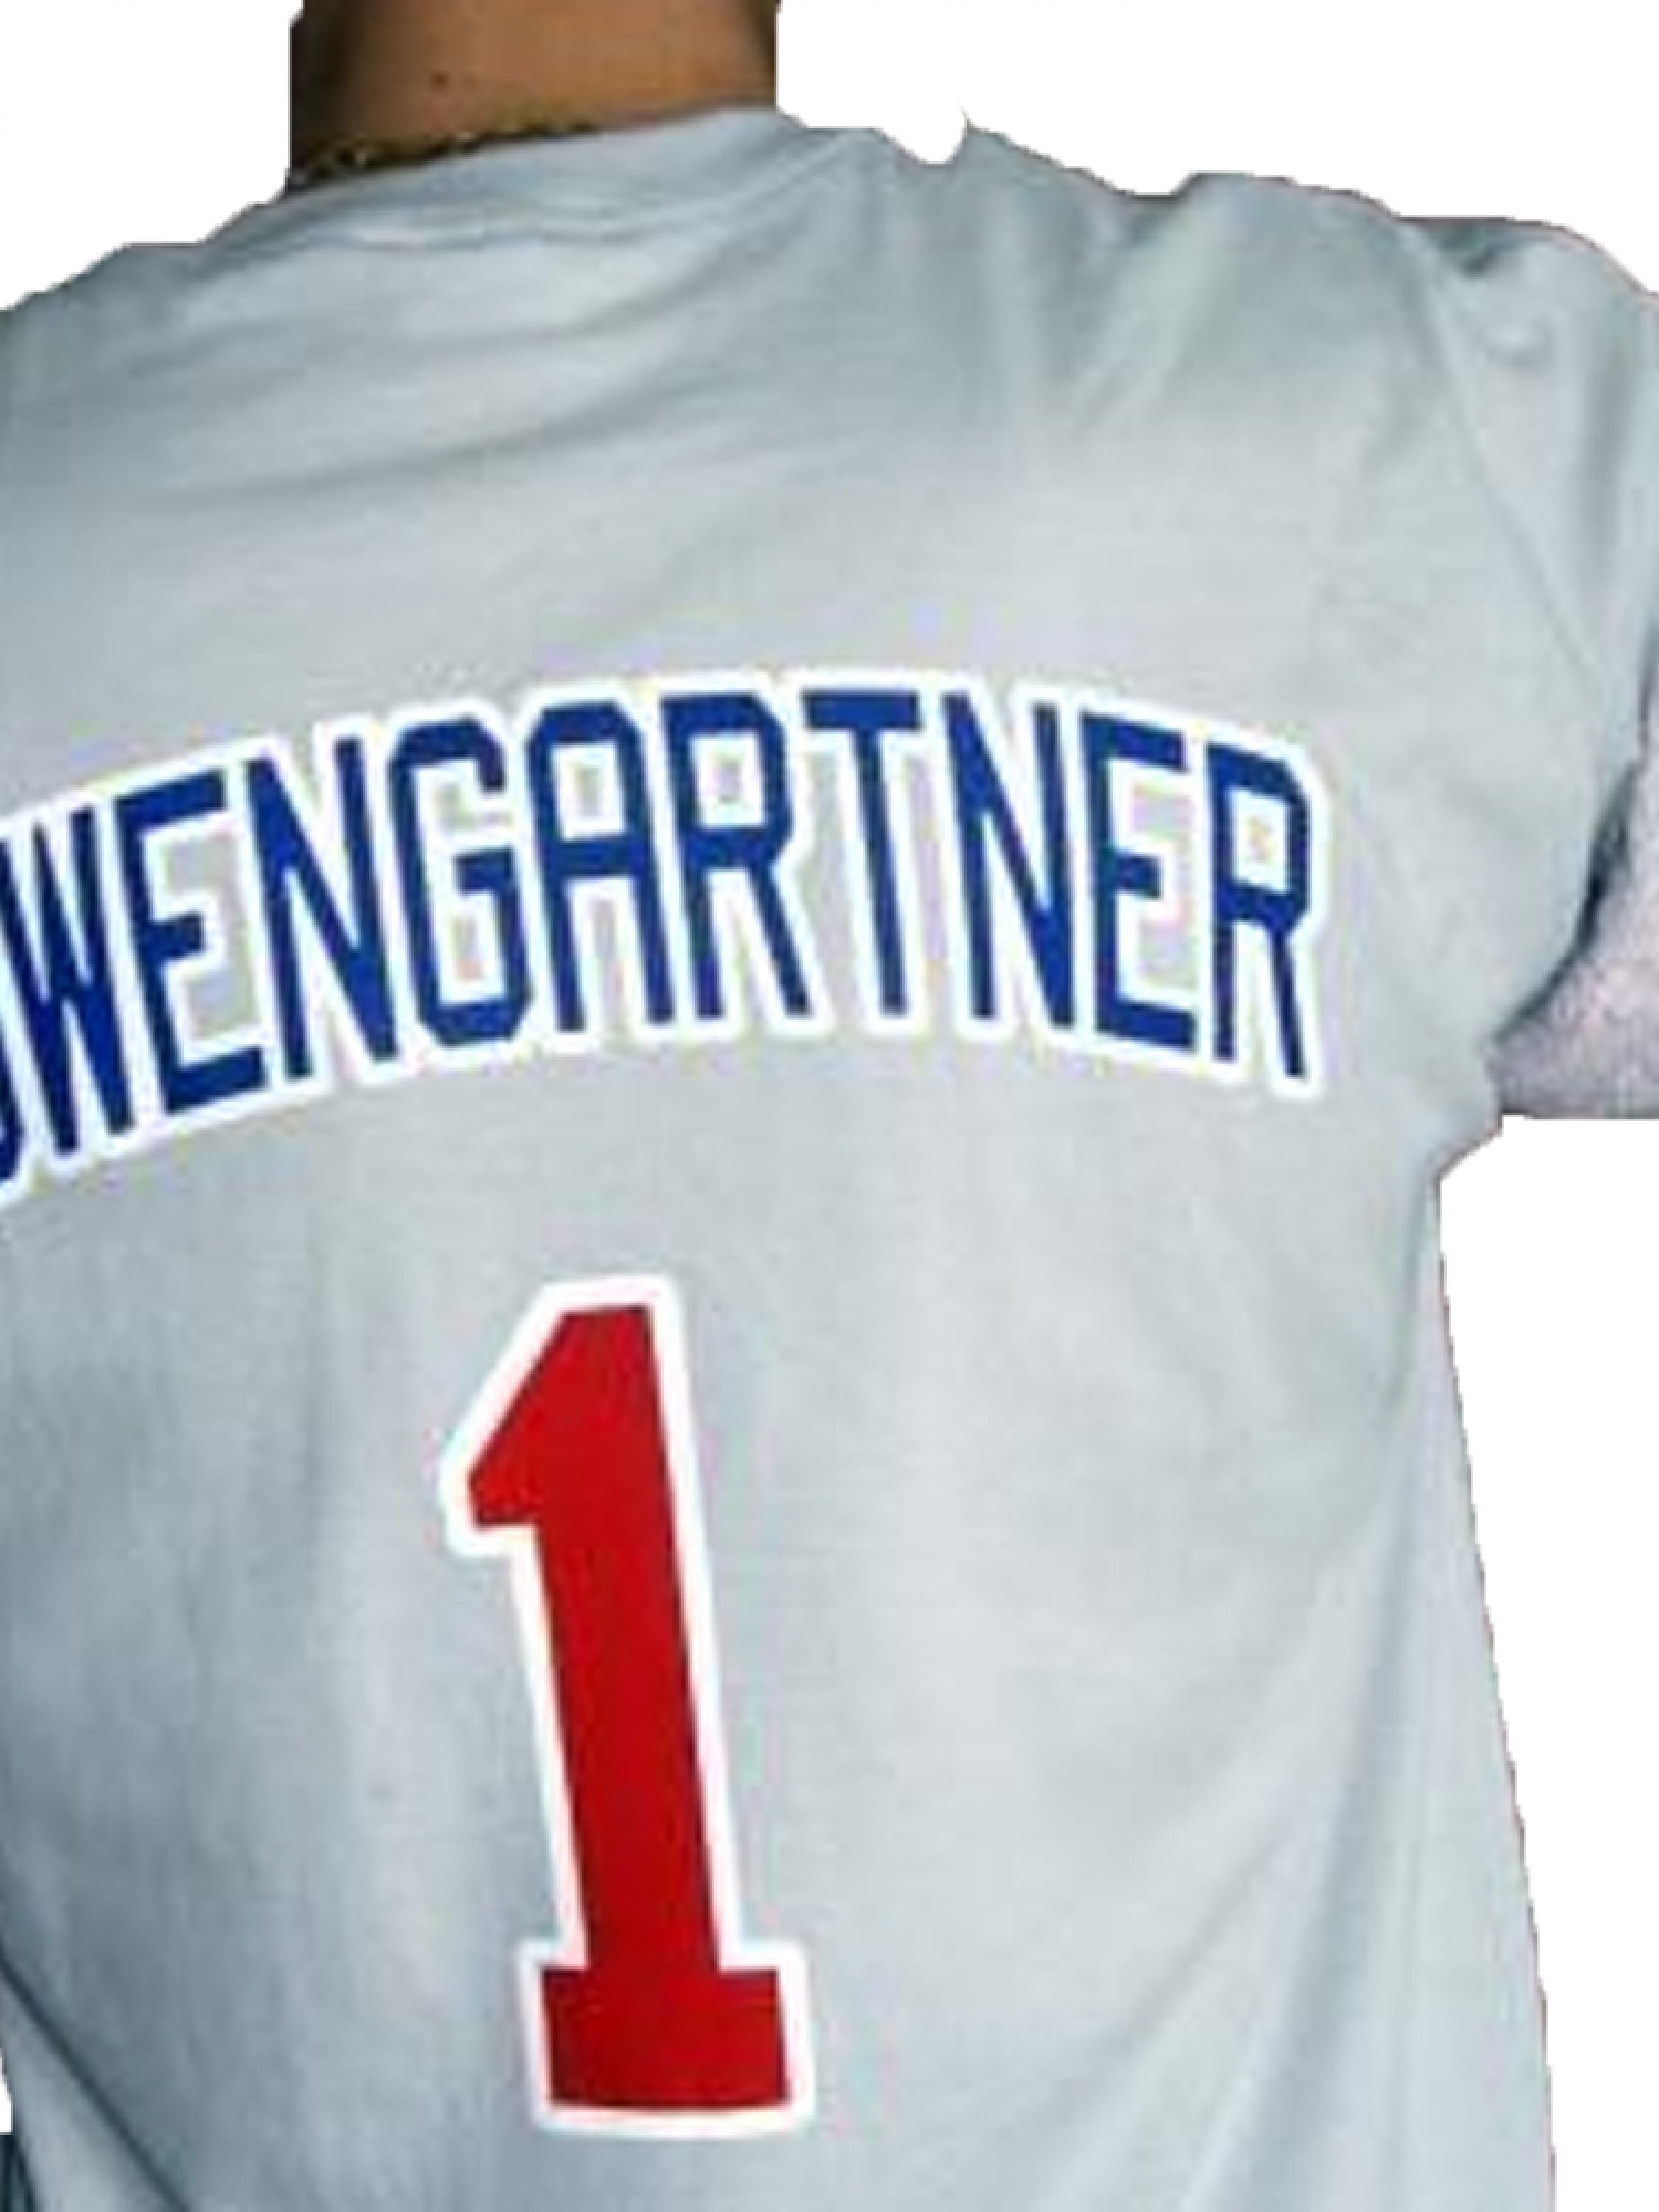 henry rowengartner jersey